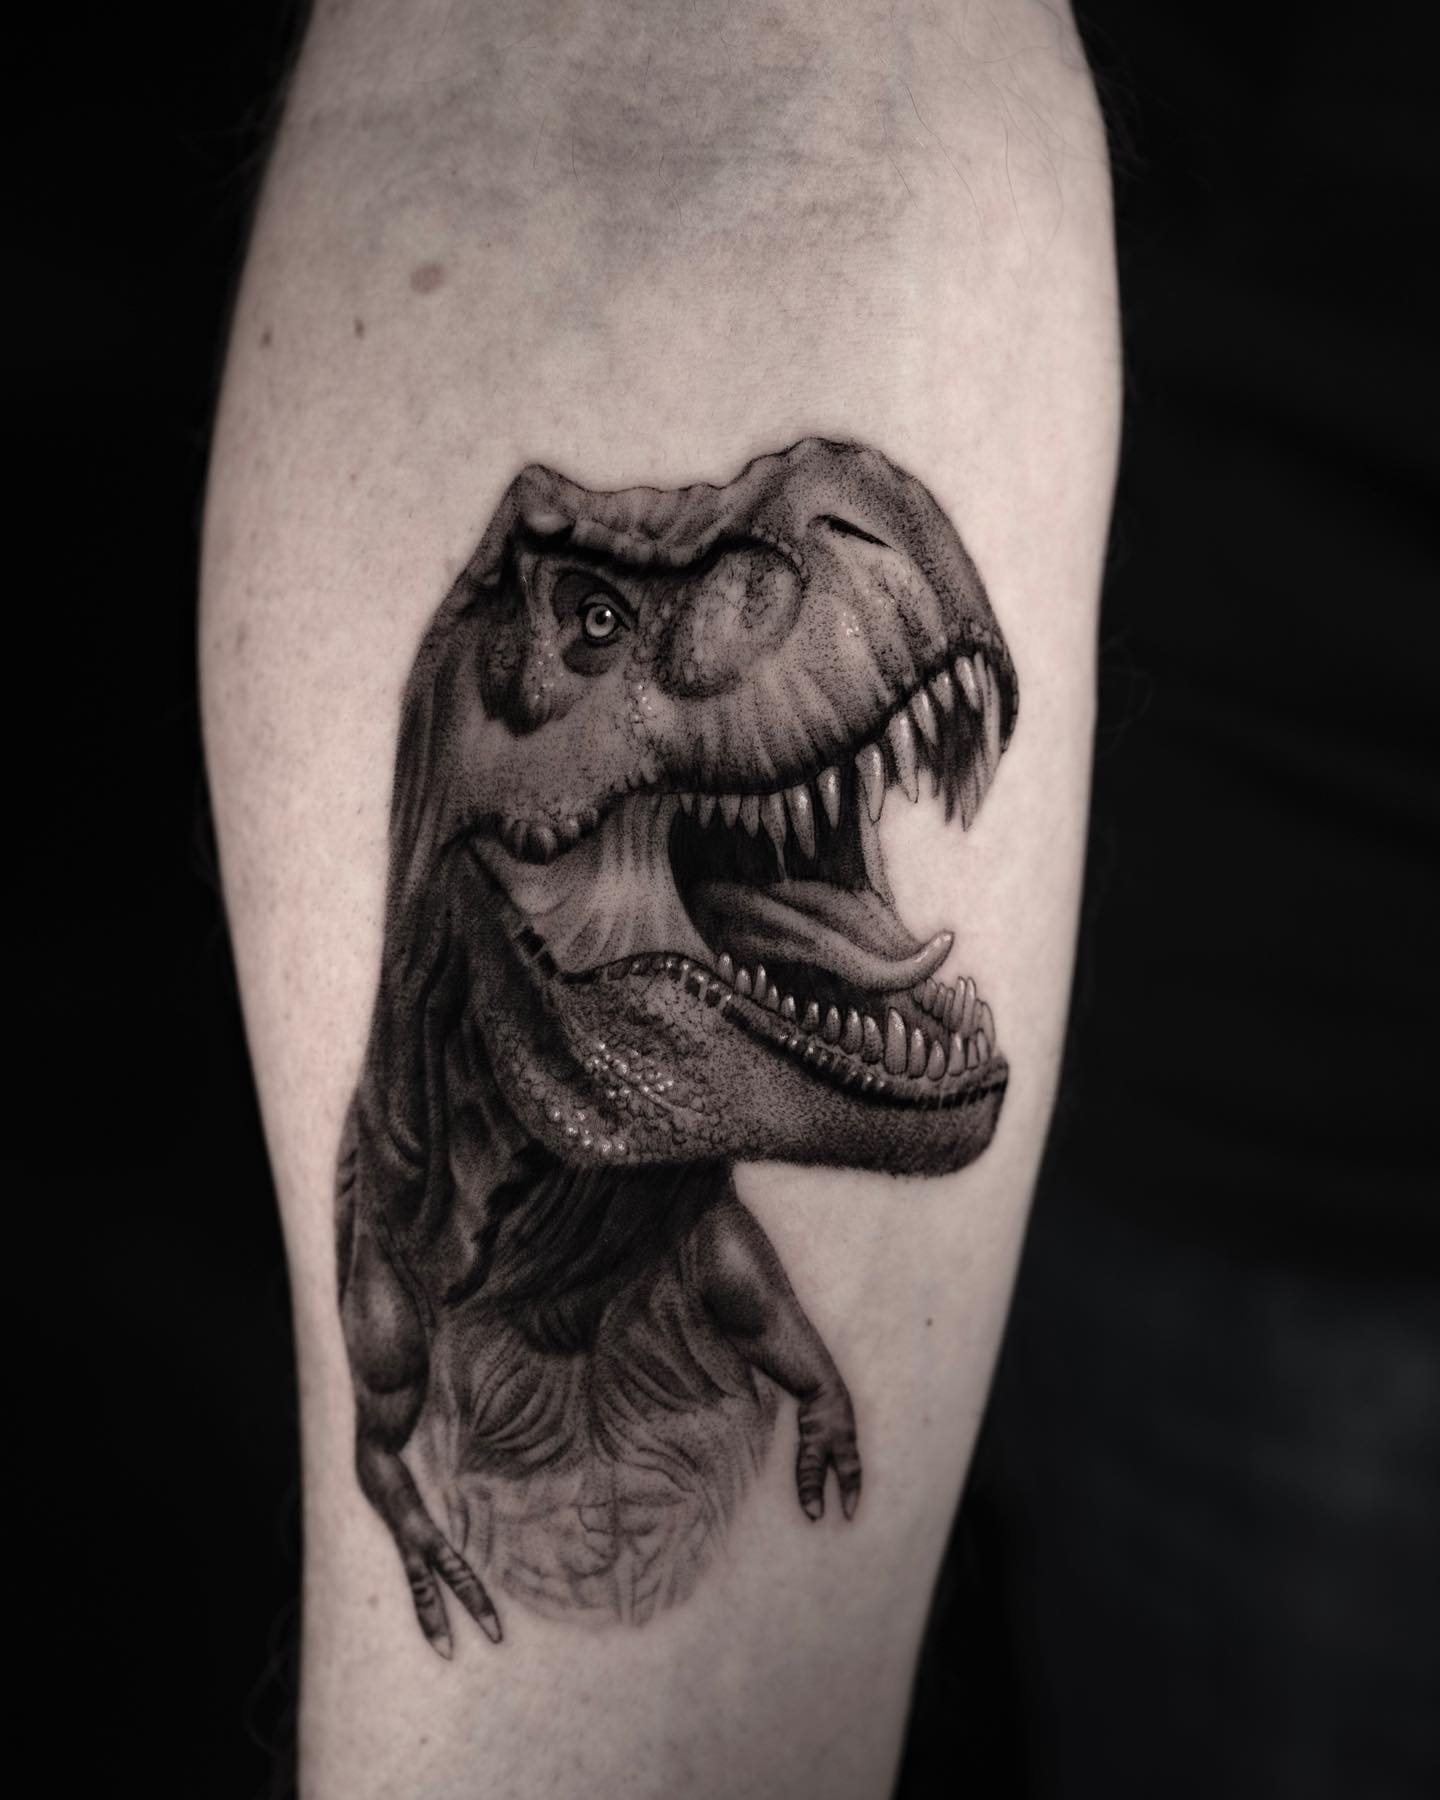 Tyrannosaurus done with a Kwadron single needle (.35)  Do you like the b&amp;w or color photo more? @etherealtattoogallery 
.
.
.
.
.
.
.
.
.
.
#art #tattoo #realism #singleneedle #dinosaur #tyrannosaurus #blackandgrey #durham #durhamnnc #raleigh #du